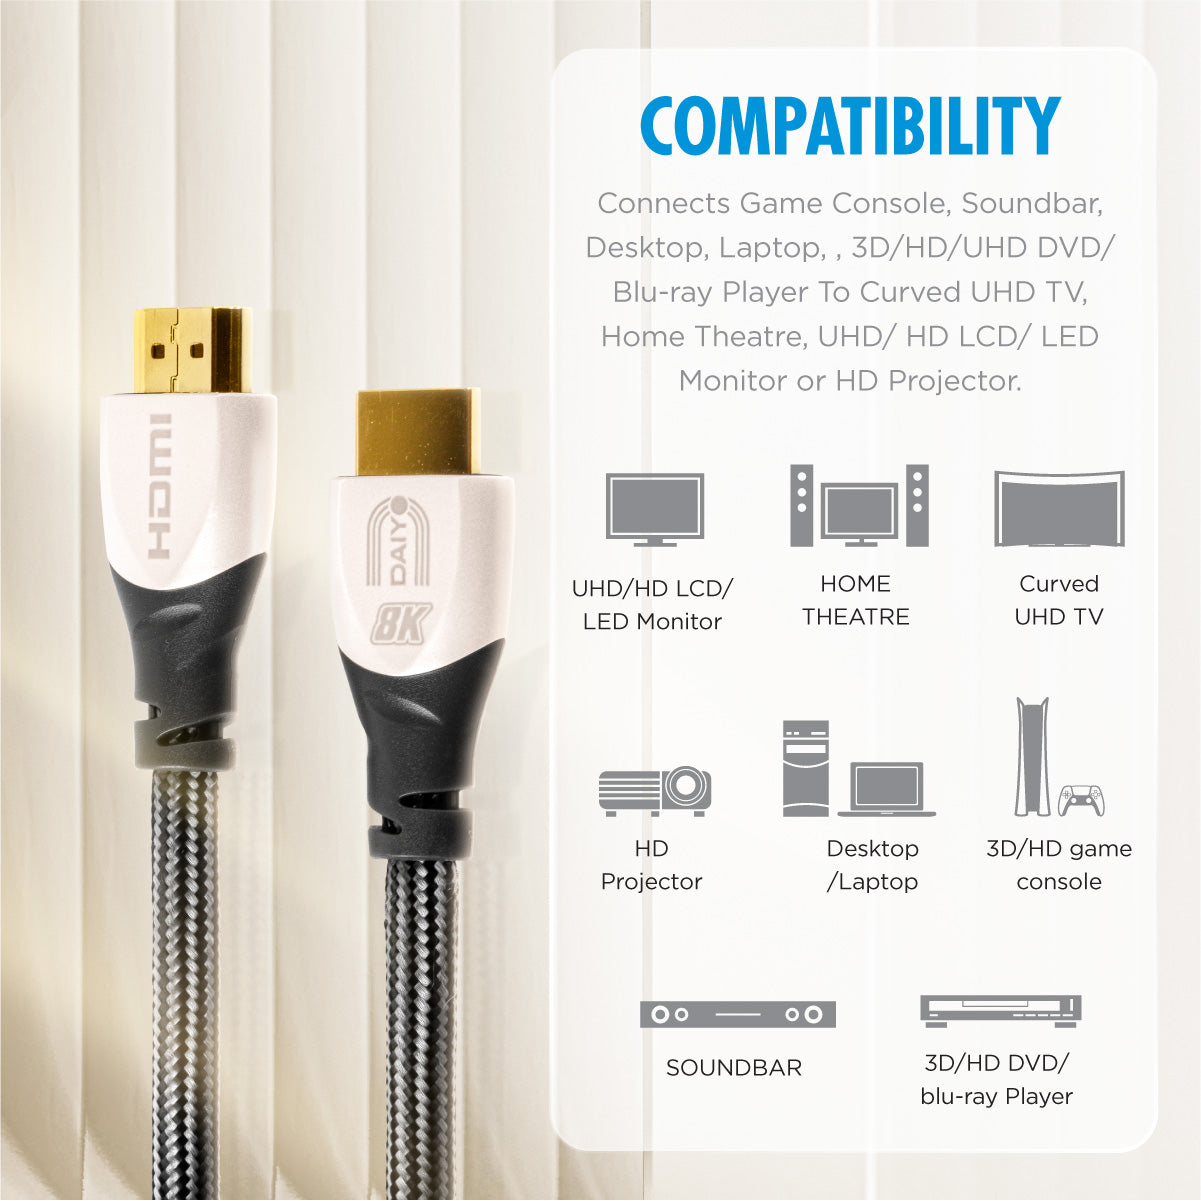 Daiyo SC 6362 8K Ultra High Speed HDMI Cable 2.1 Version 2.0m